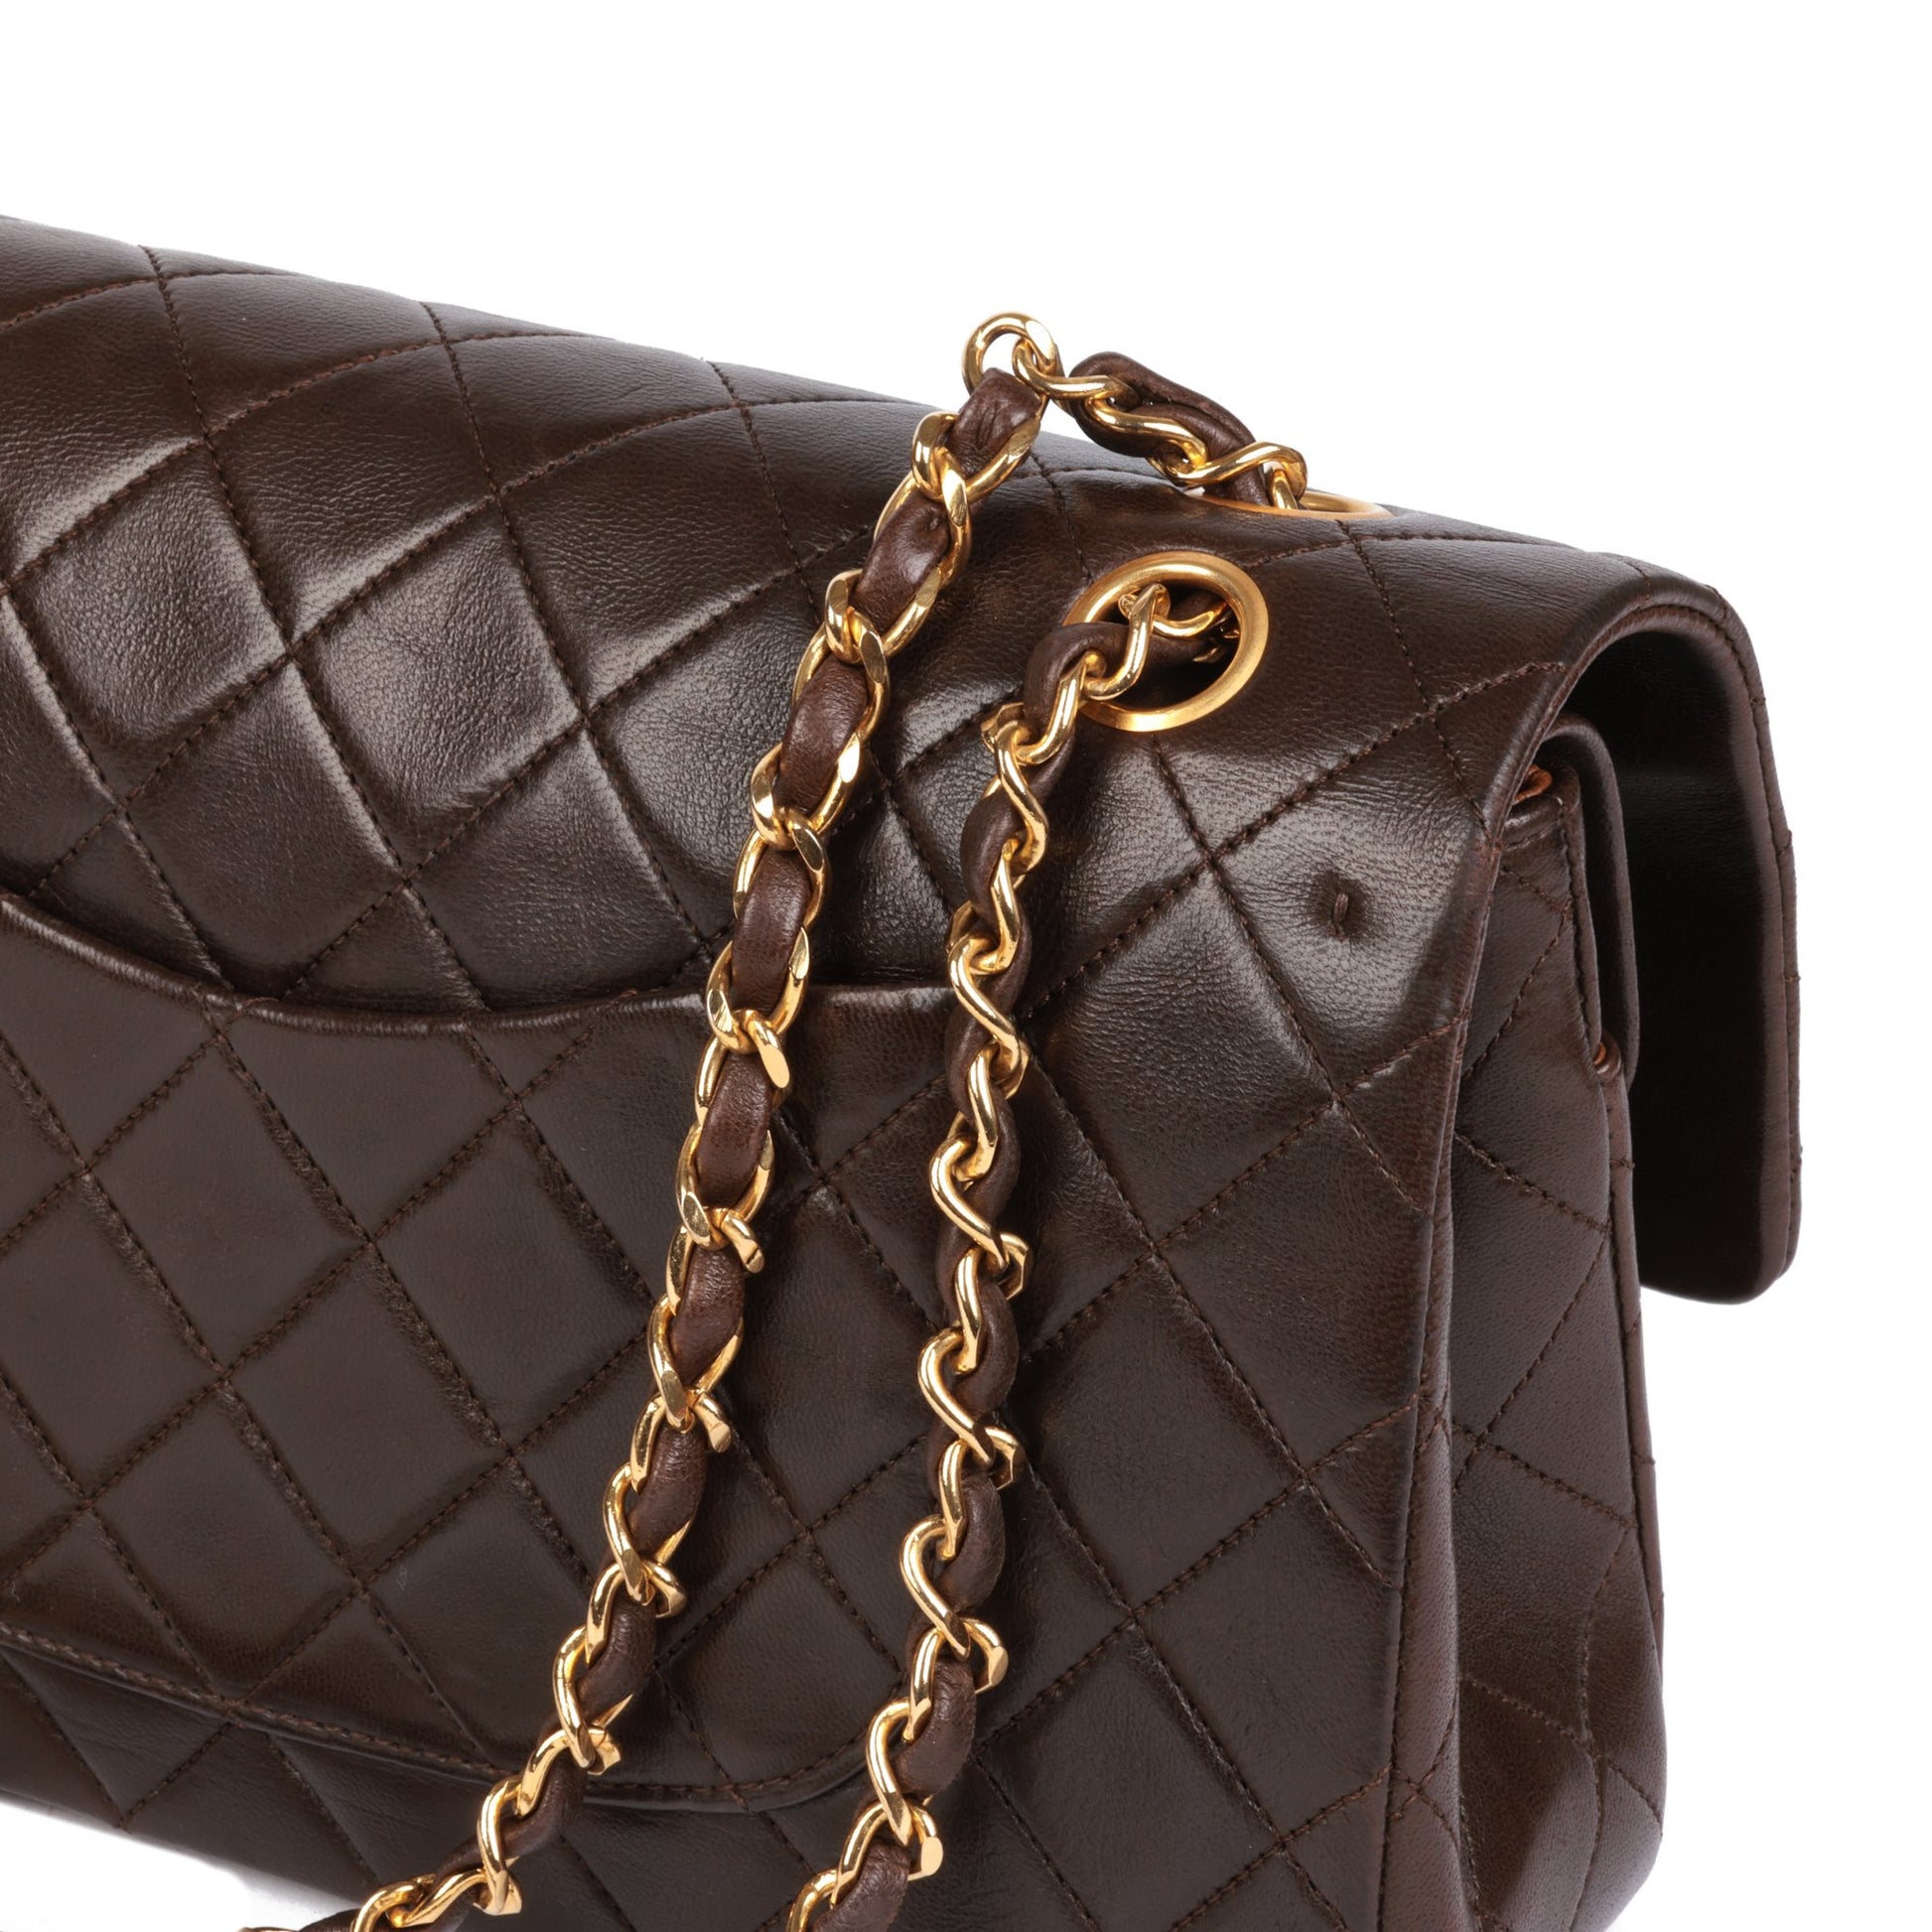 Chanel Timeless Medium flap bag camel caviar leather